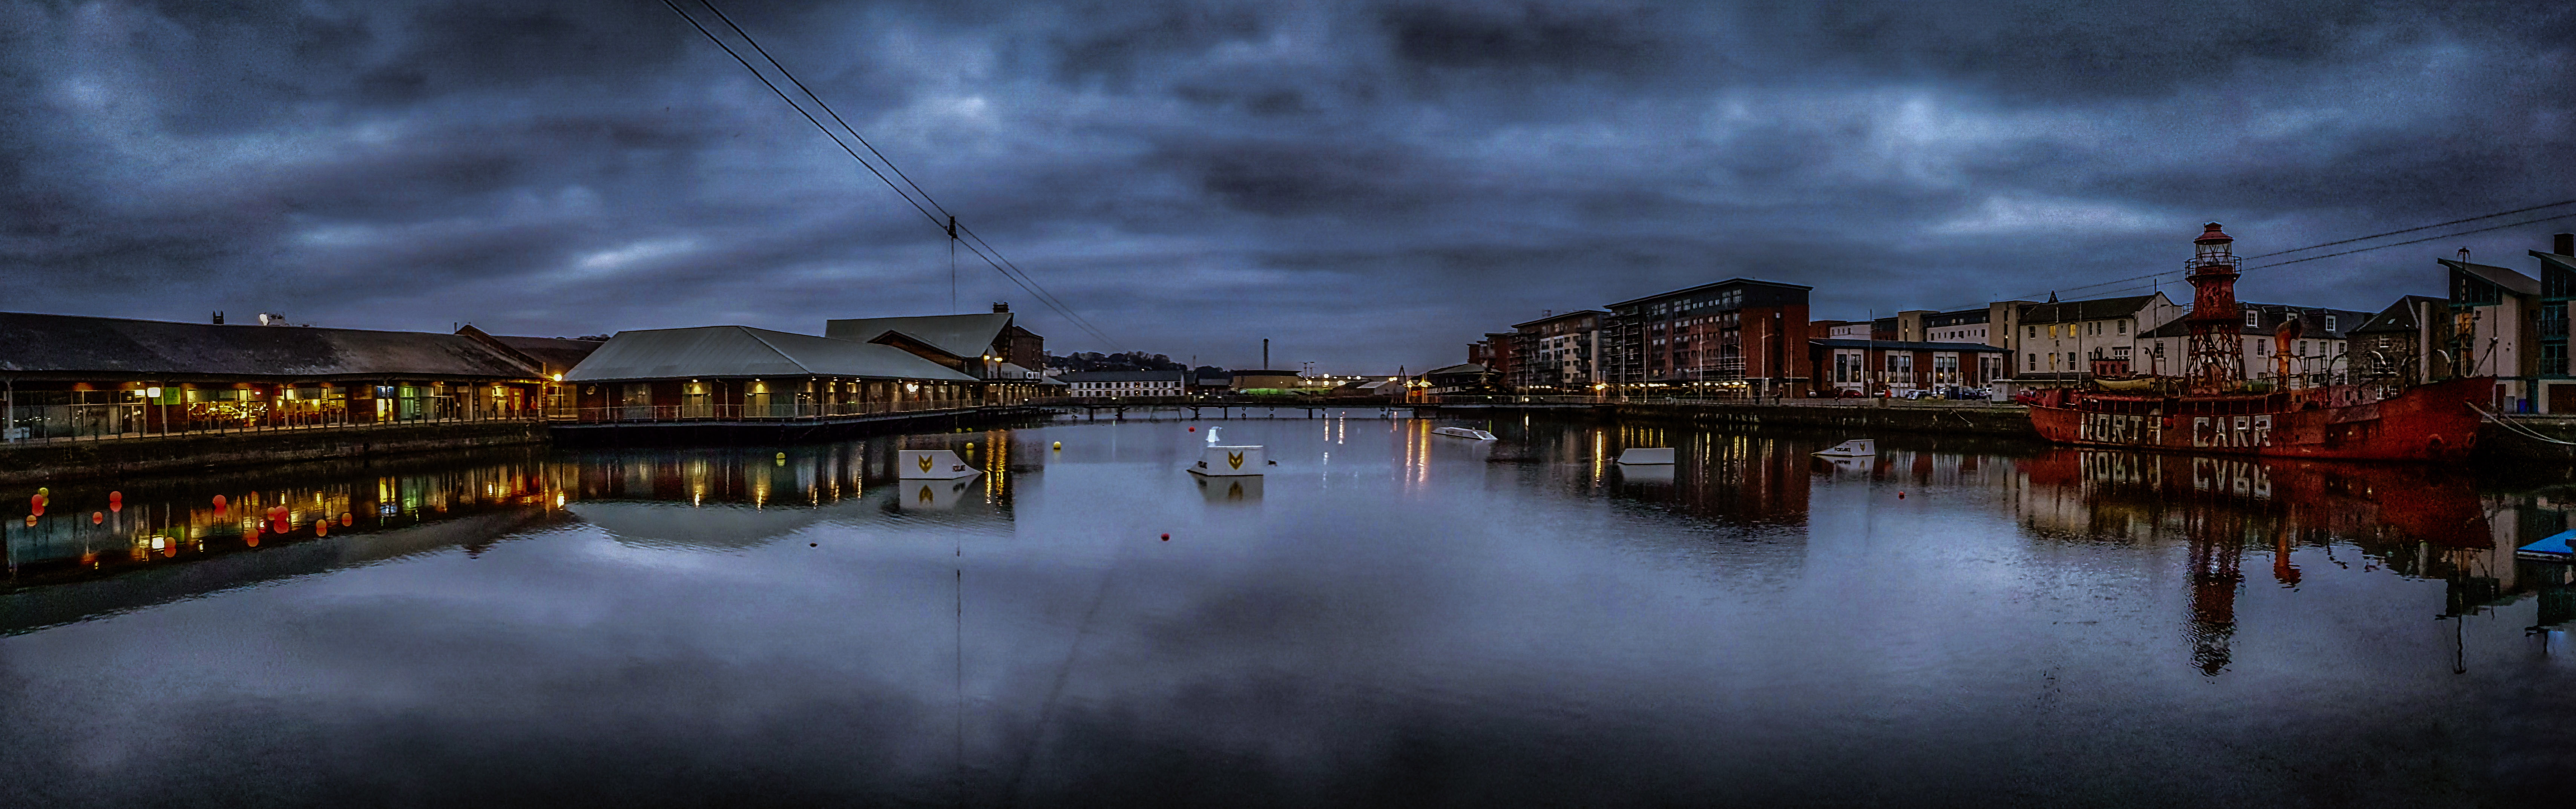 Dundee docks